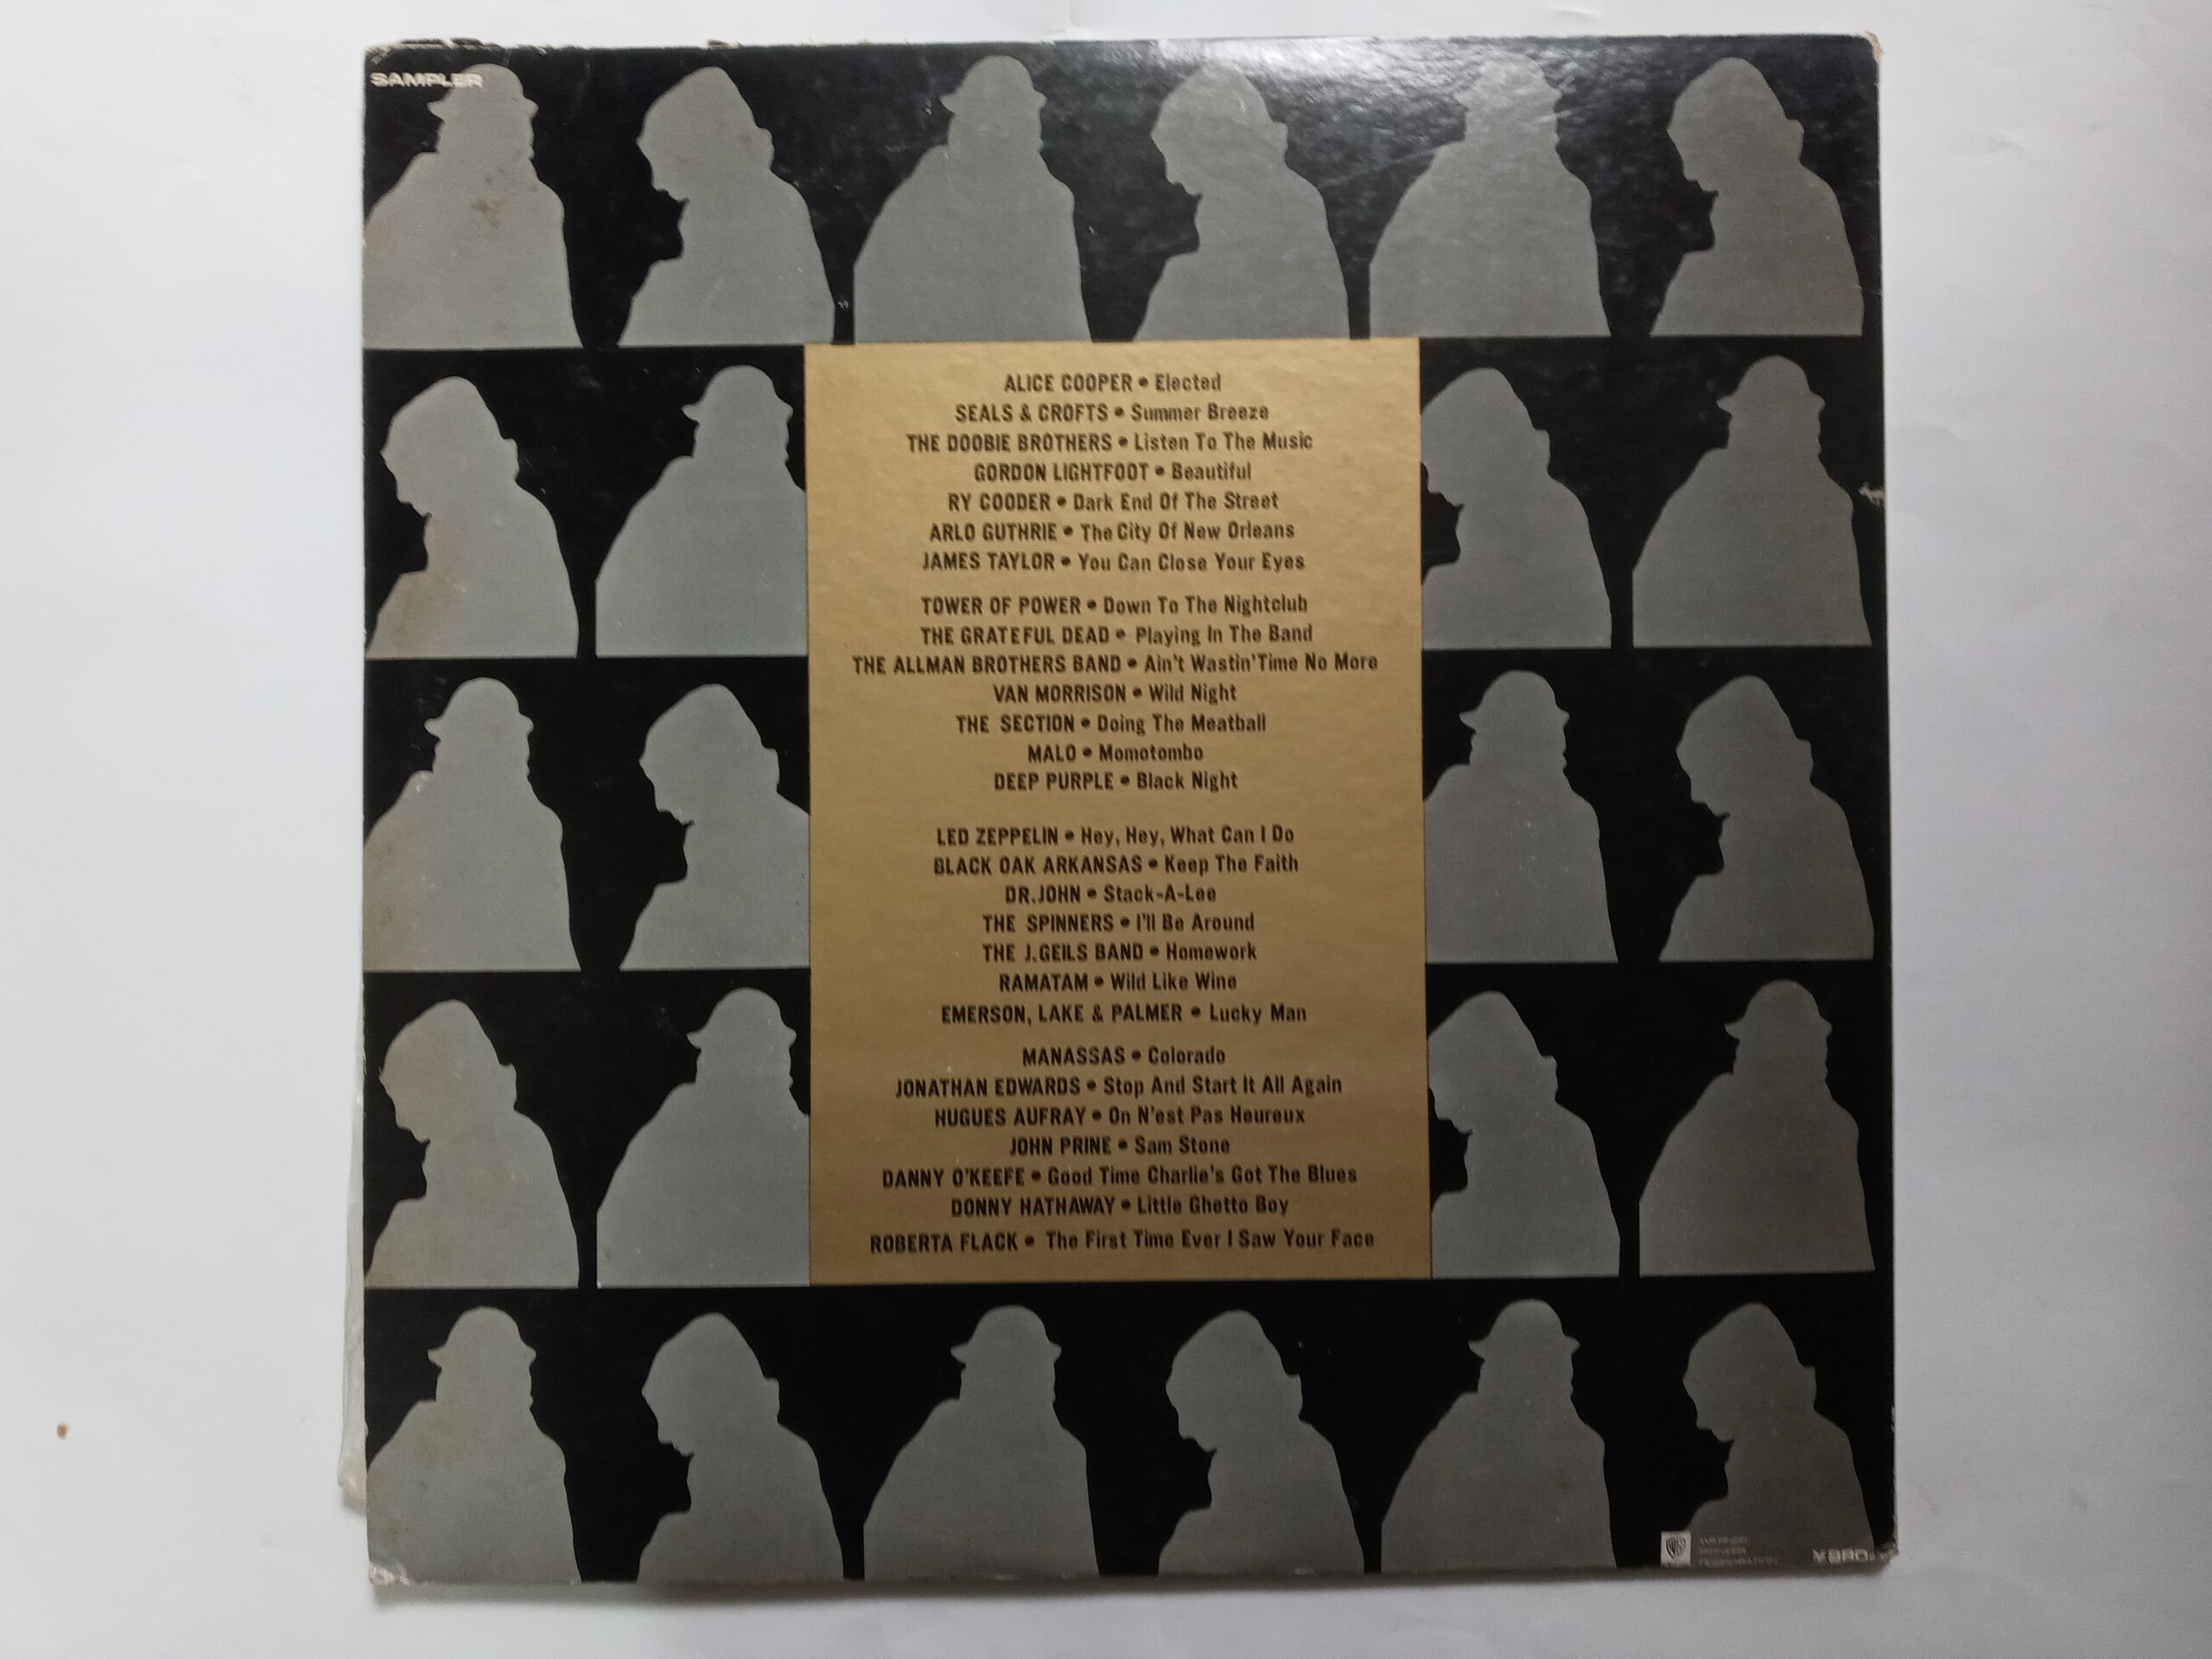 LP(수입) Hot Menu‘73 - 딥 퍼플/레드 제플린/밴 모리슨/로버타 플랙 외(GF 2LP) 